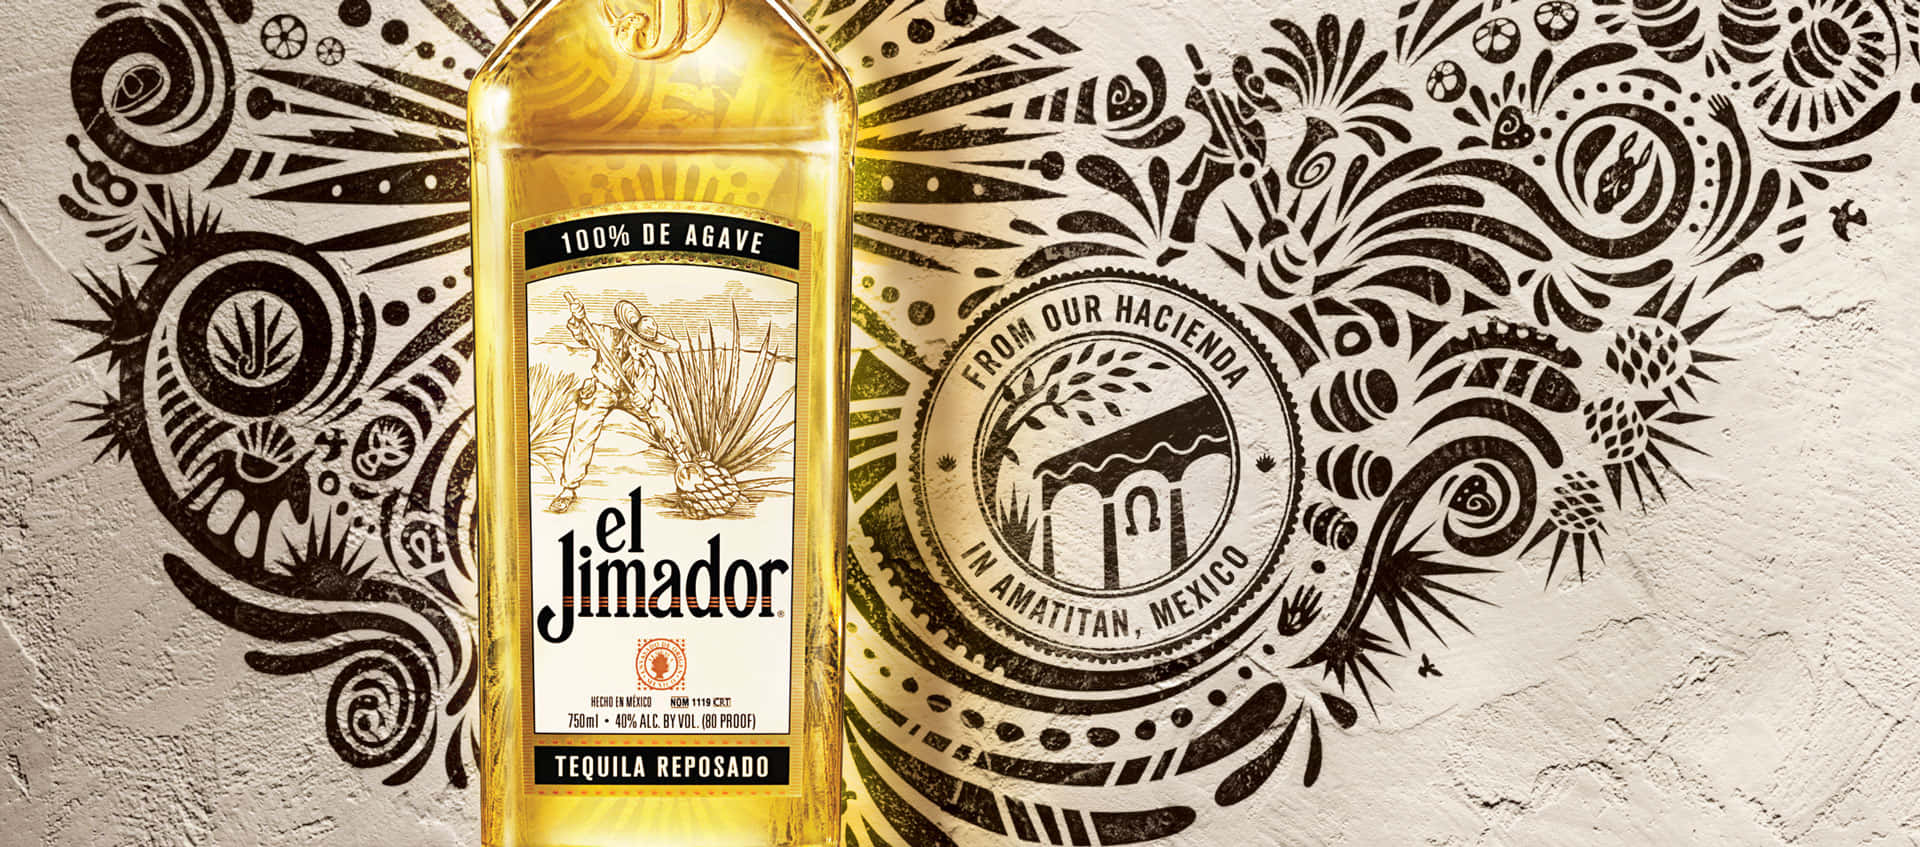 Caption: Explore the Authentic Taste - El Jimador Reposado Tequila Wallpaper